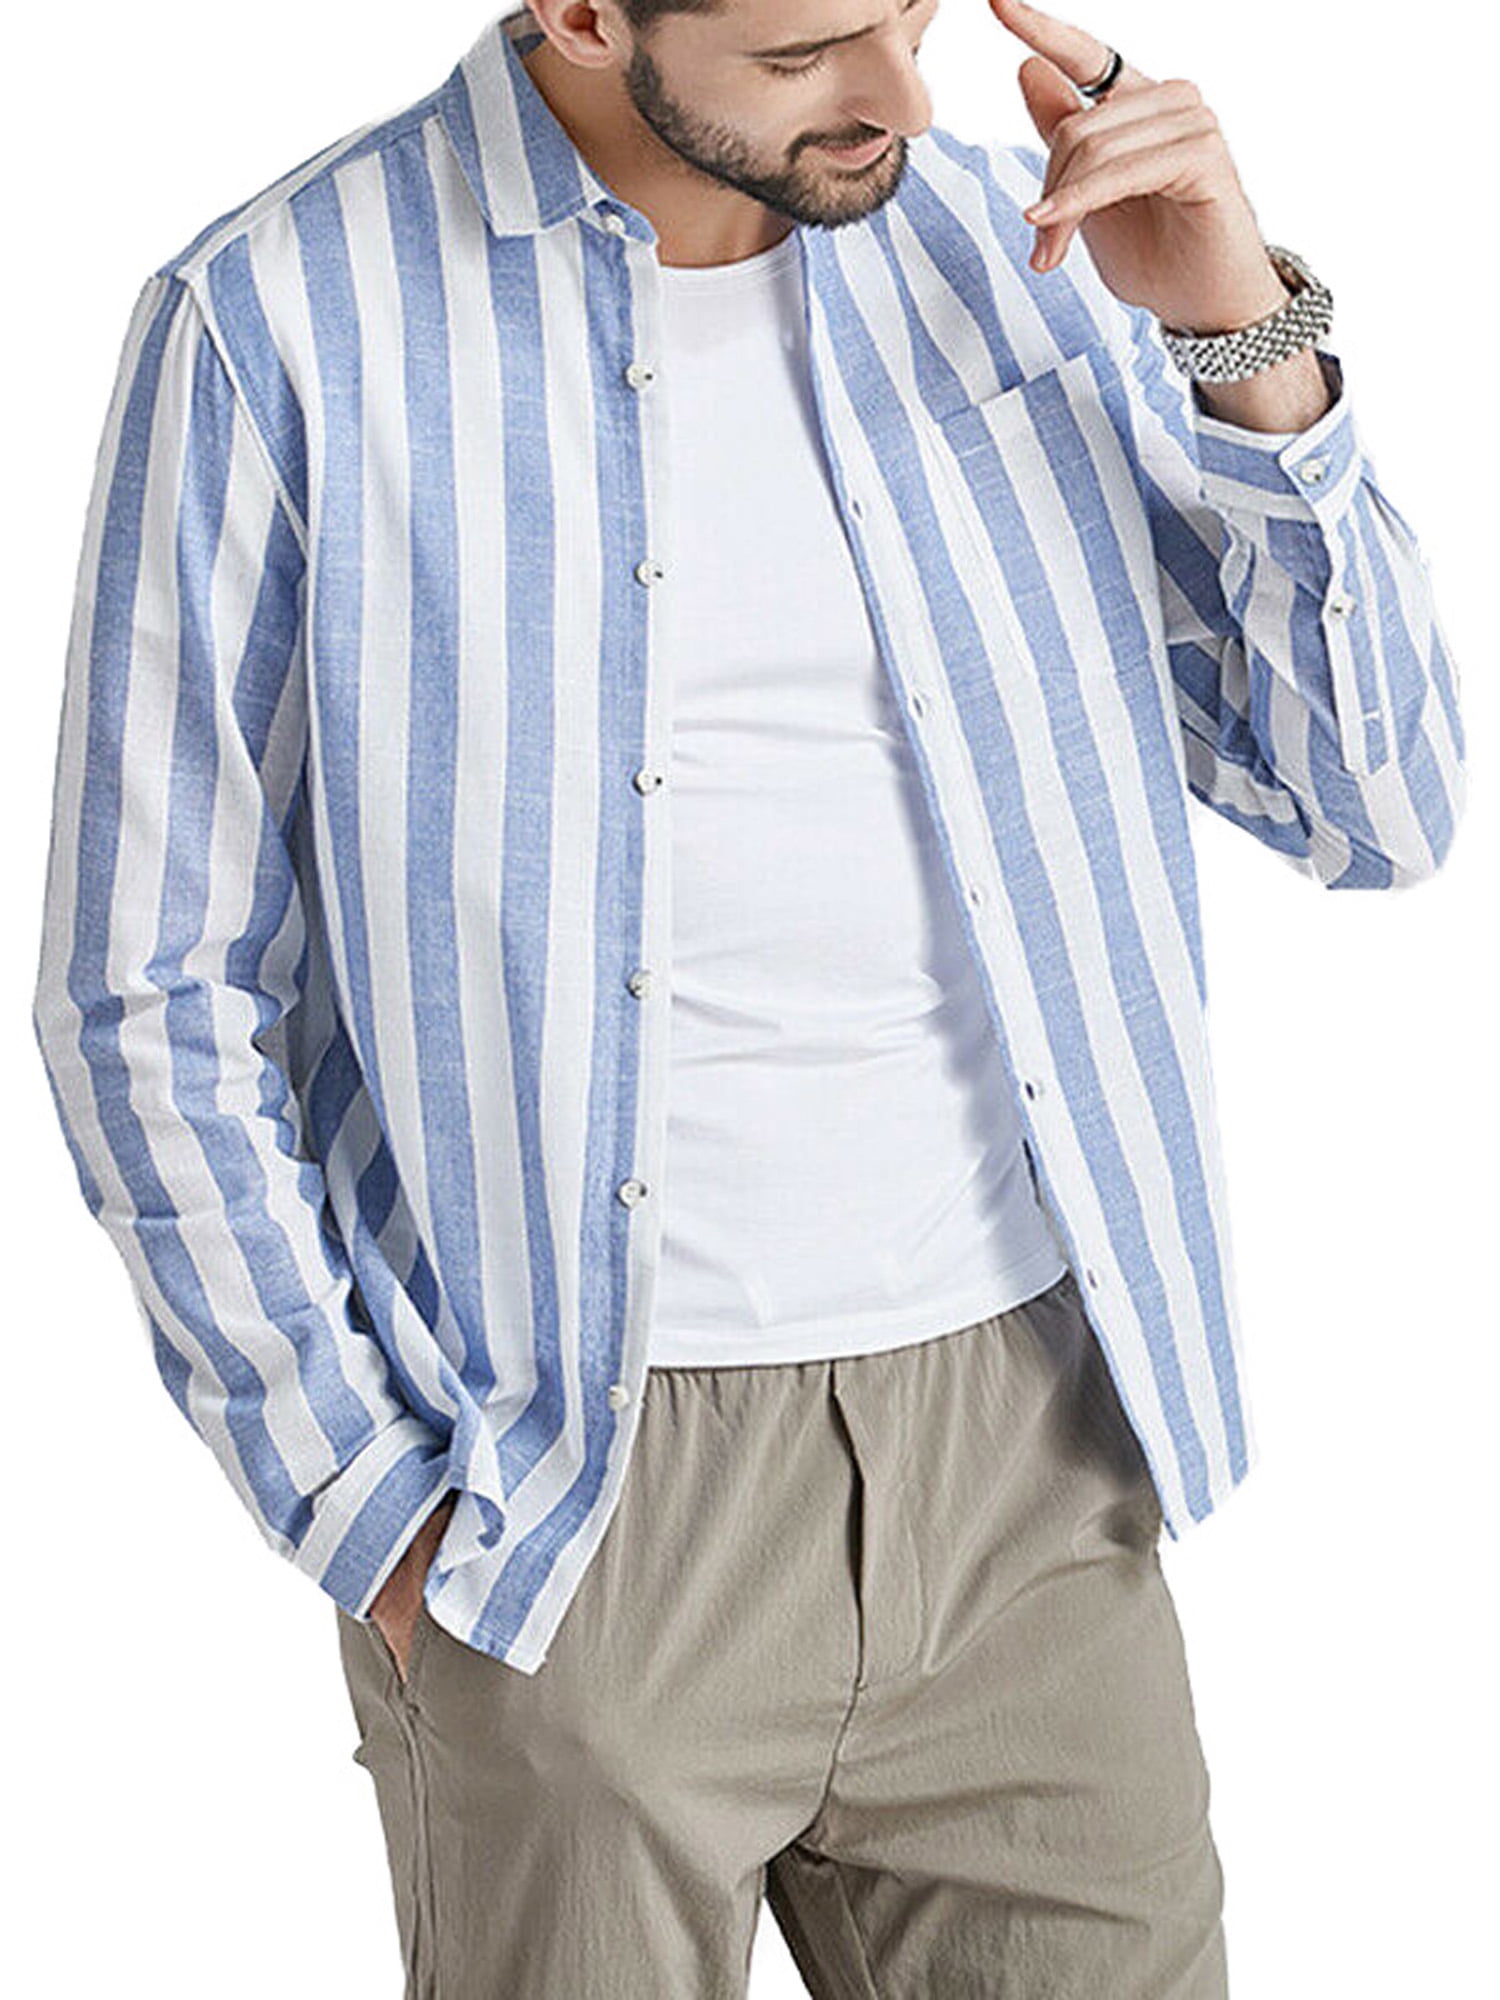 Wodstyle - Men's Linen Striped Long Sleeve Basic Shirts Bottons Tops